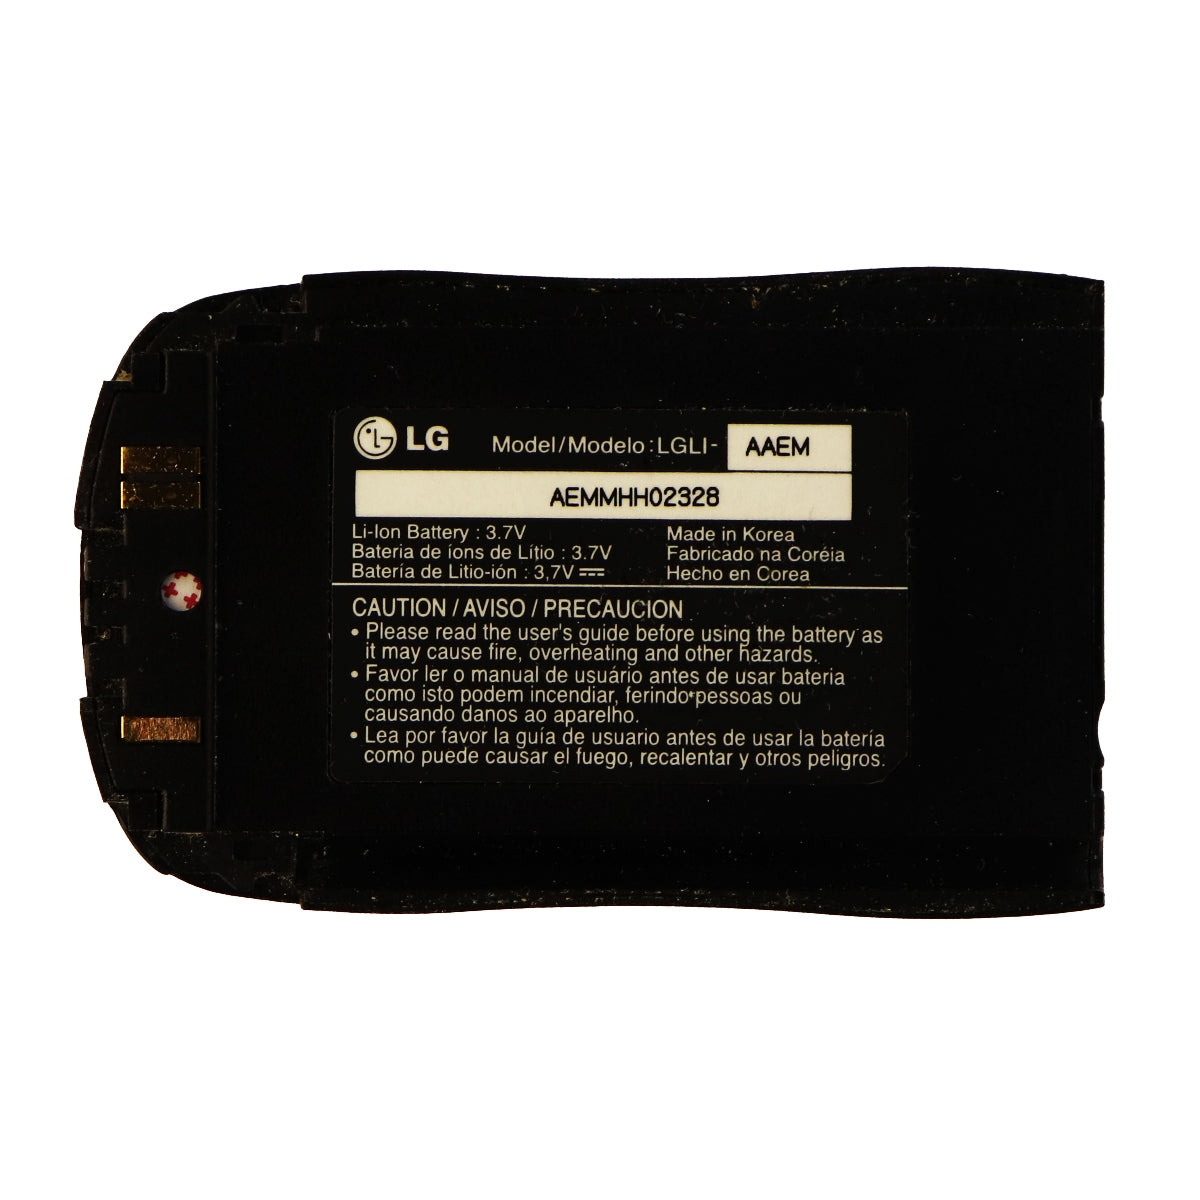 LG Li-ion OEM Battery (LGLI-AAEM) 3.7V for LG-510 TM-510 SP-510 Models - Black Cell Phone - Batteries LG    - Simple Cell Bulk Wholesale Pricing - USA Seller